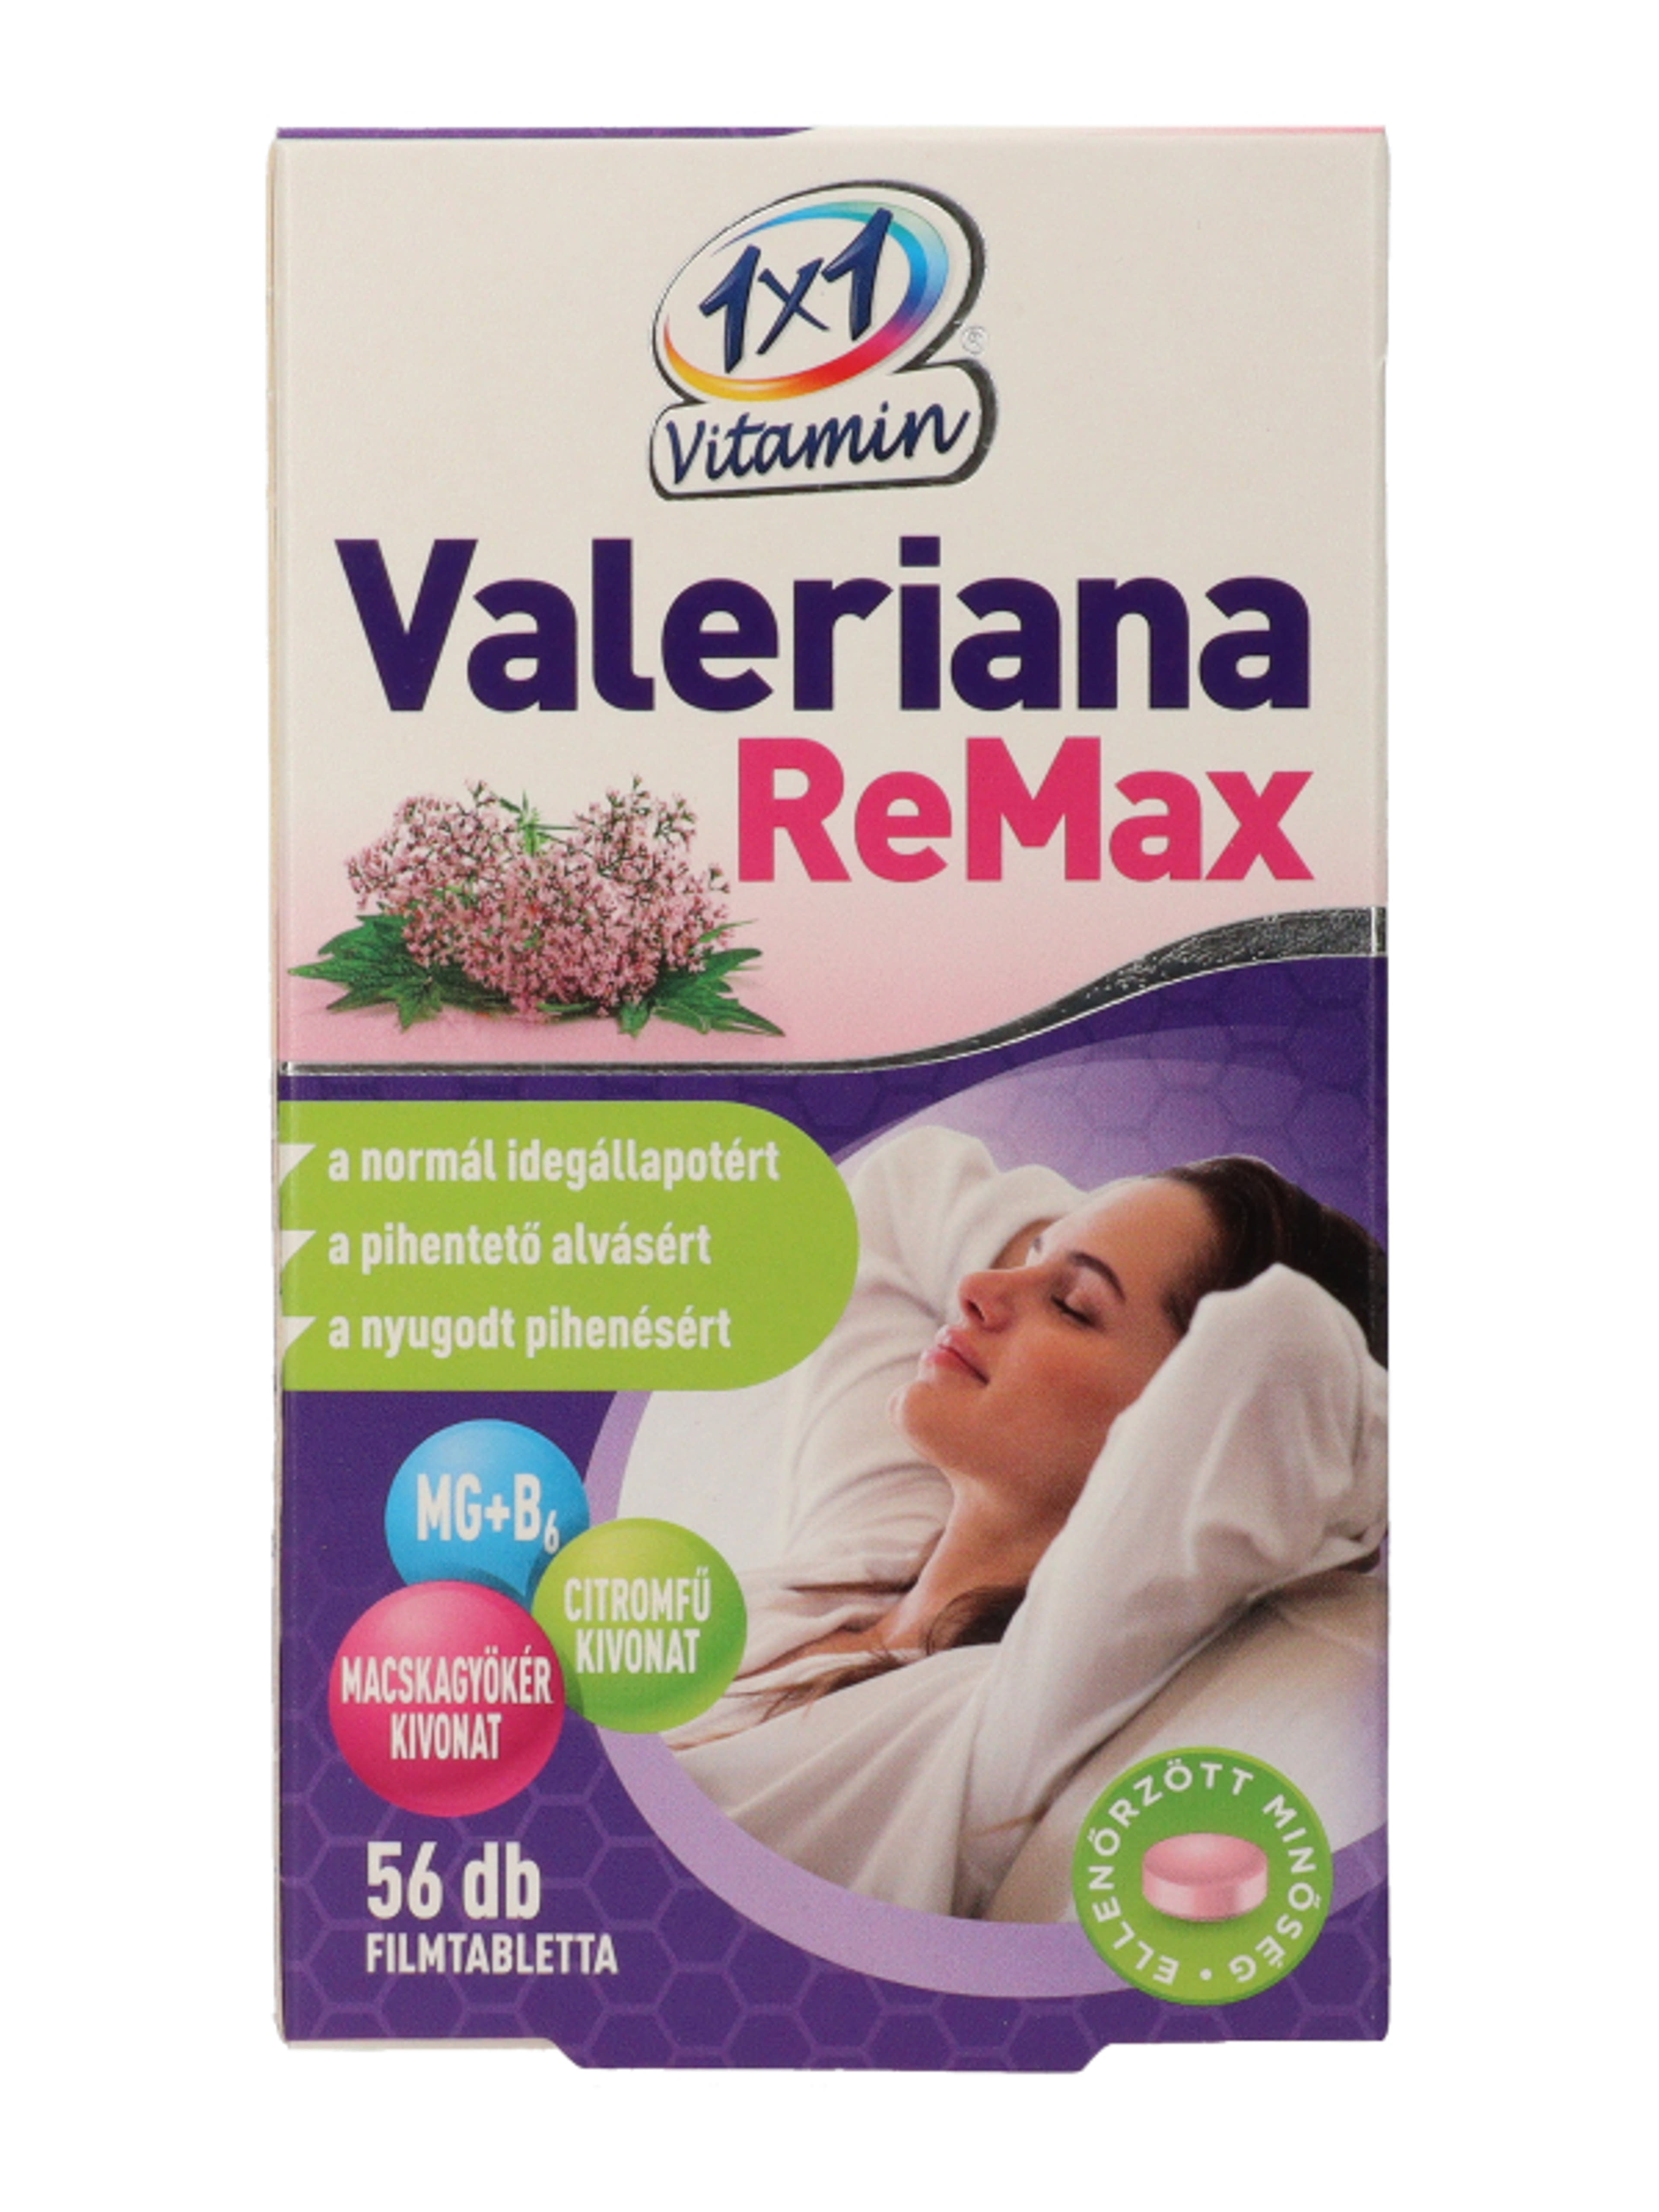 1x1 vitamin valeriana remax étrend-kiegészítő filmtabletta - 56 db-2